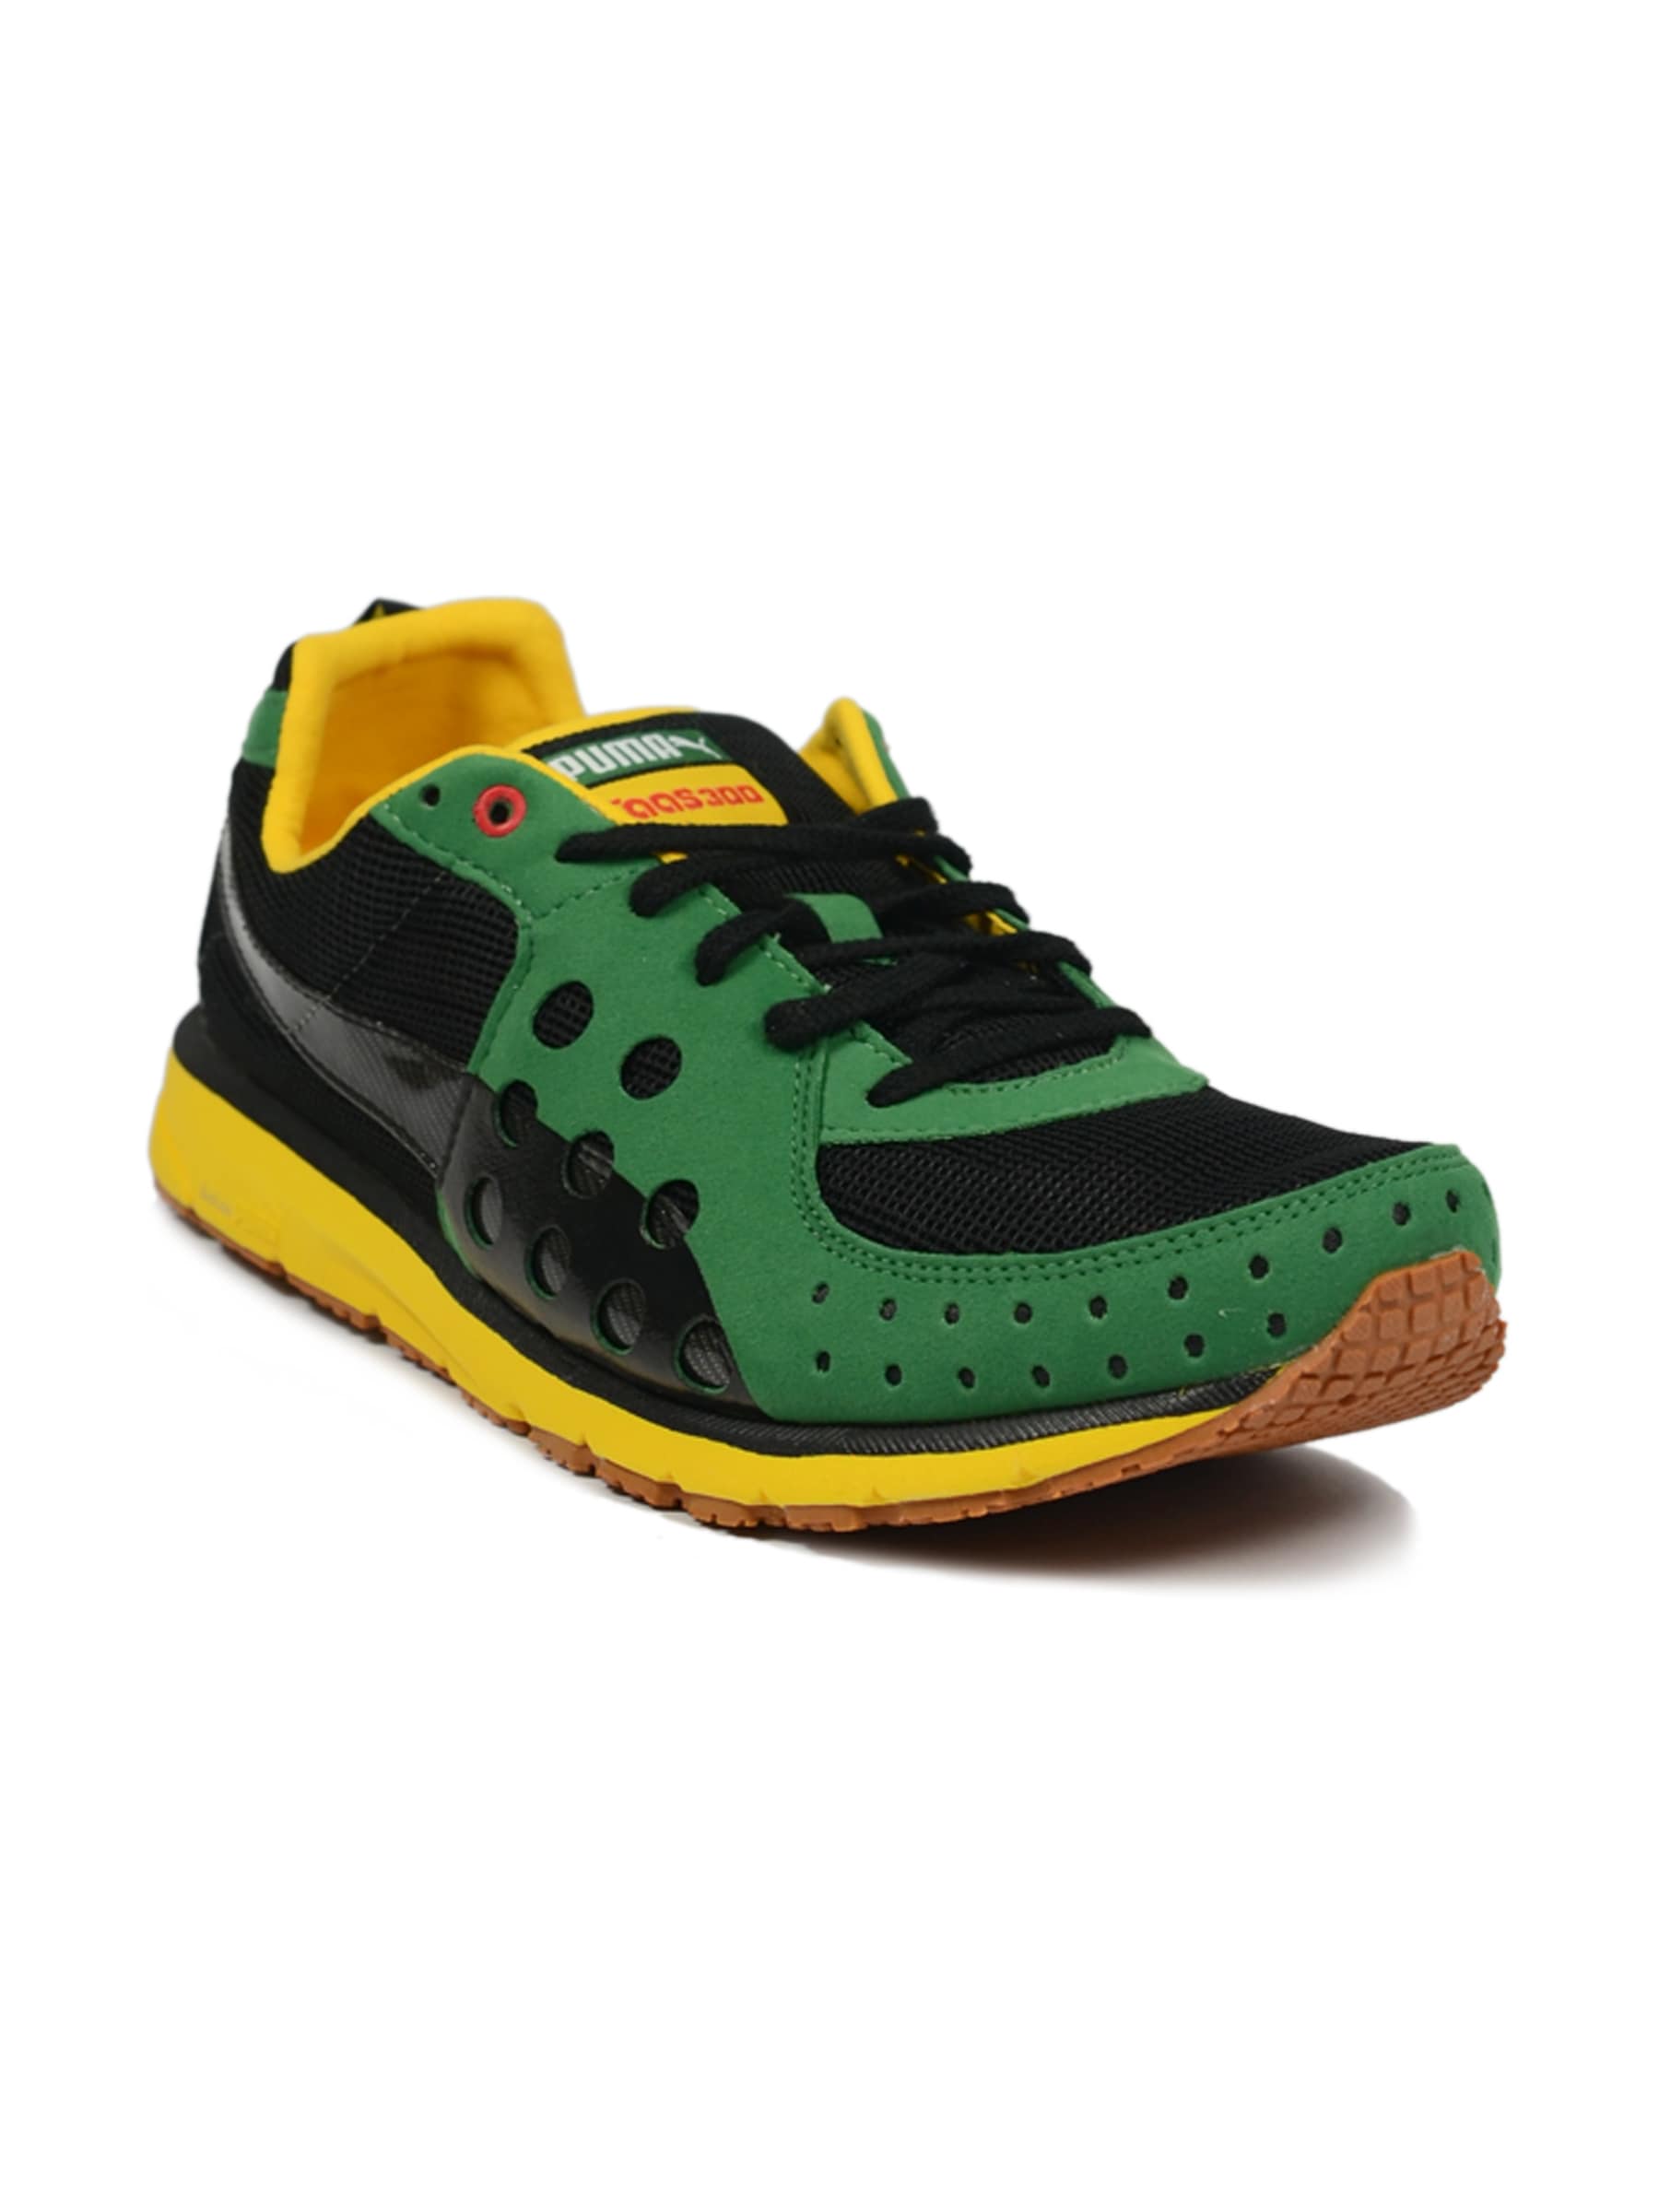 Puma Men's Faas 300 JAM Black Green Yellow Shoe